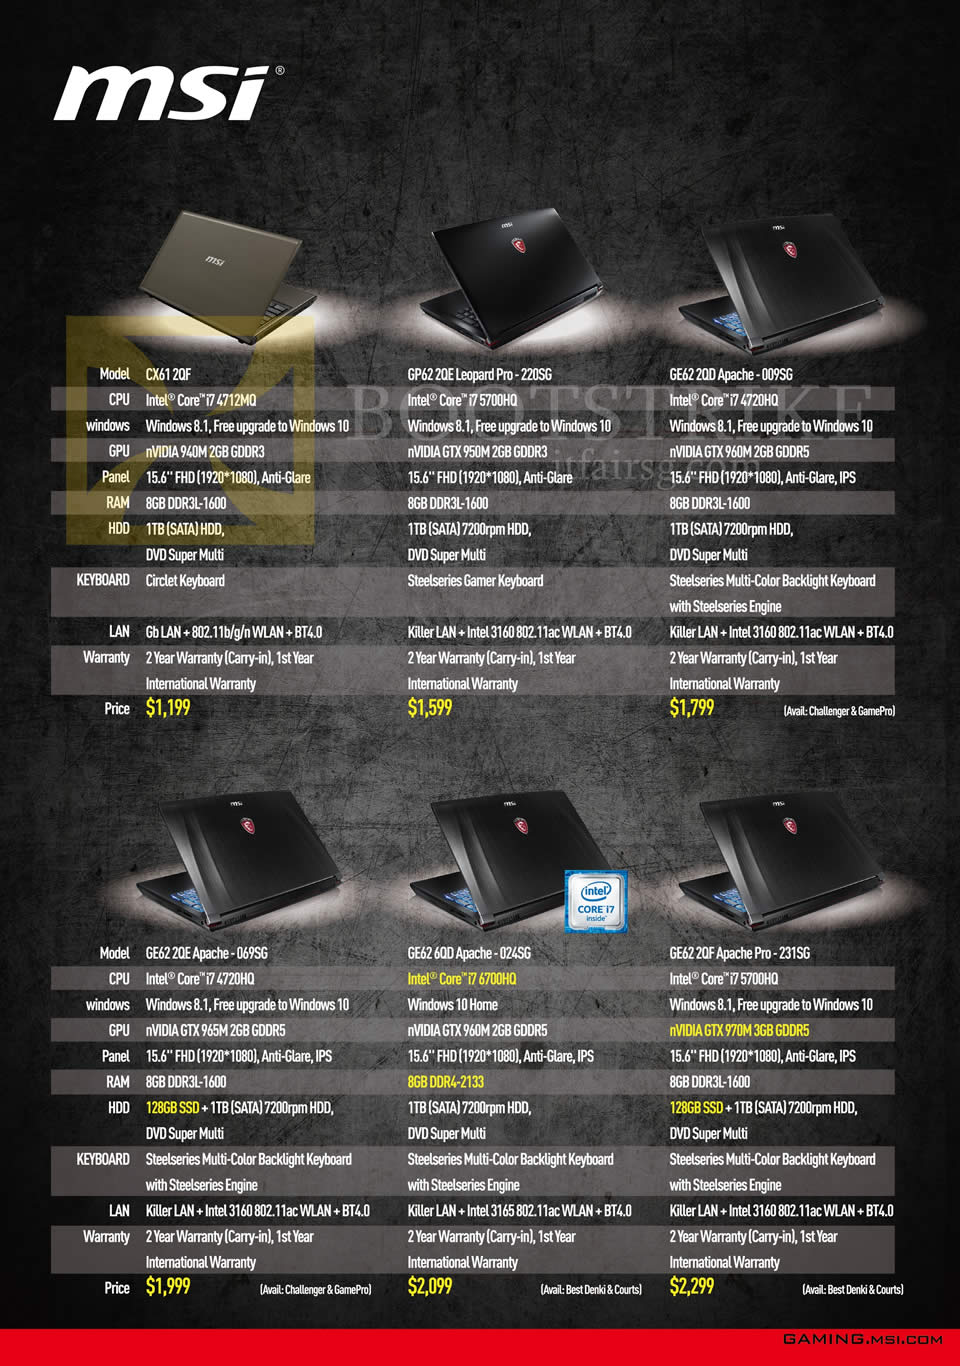 SITEX 2015 price list image brochure of MSI Notebooks CX6120F, GP62 2QE Leopard Pro 220SG, GE62 2QD Apache 009SG, GE62 2QE Apache 069SG, GE62 6QD Apache 024SG, GE622QF Apache Pro 231SG